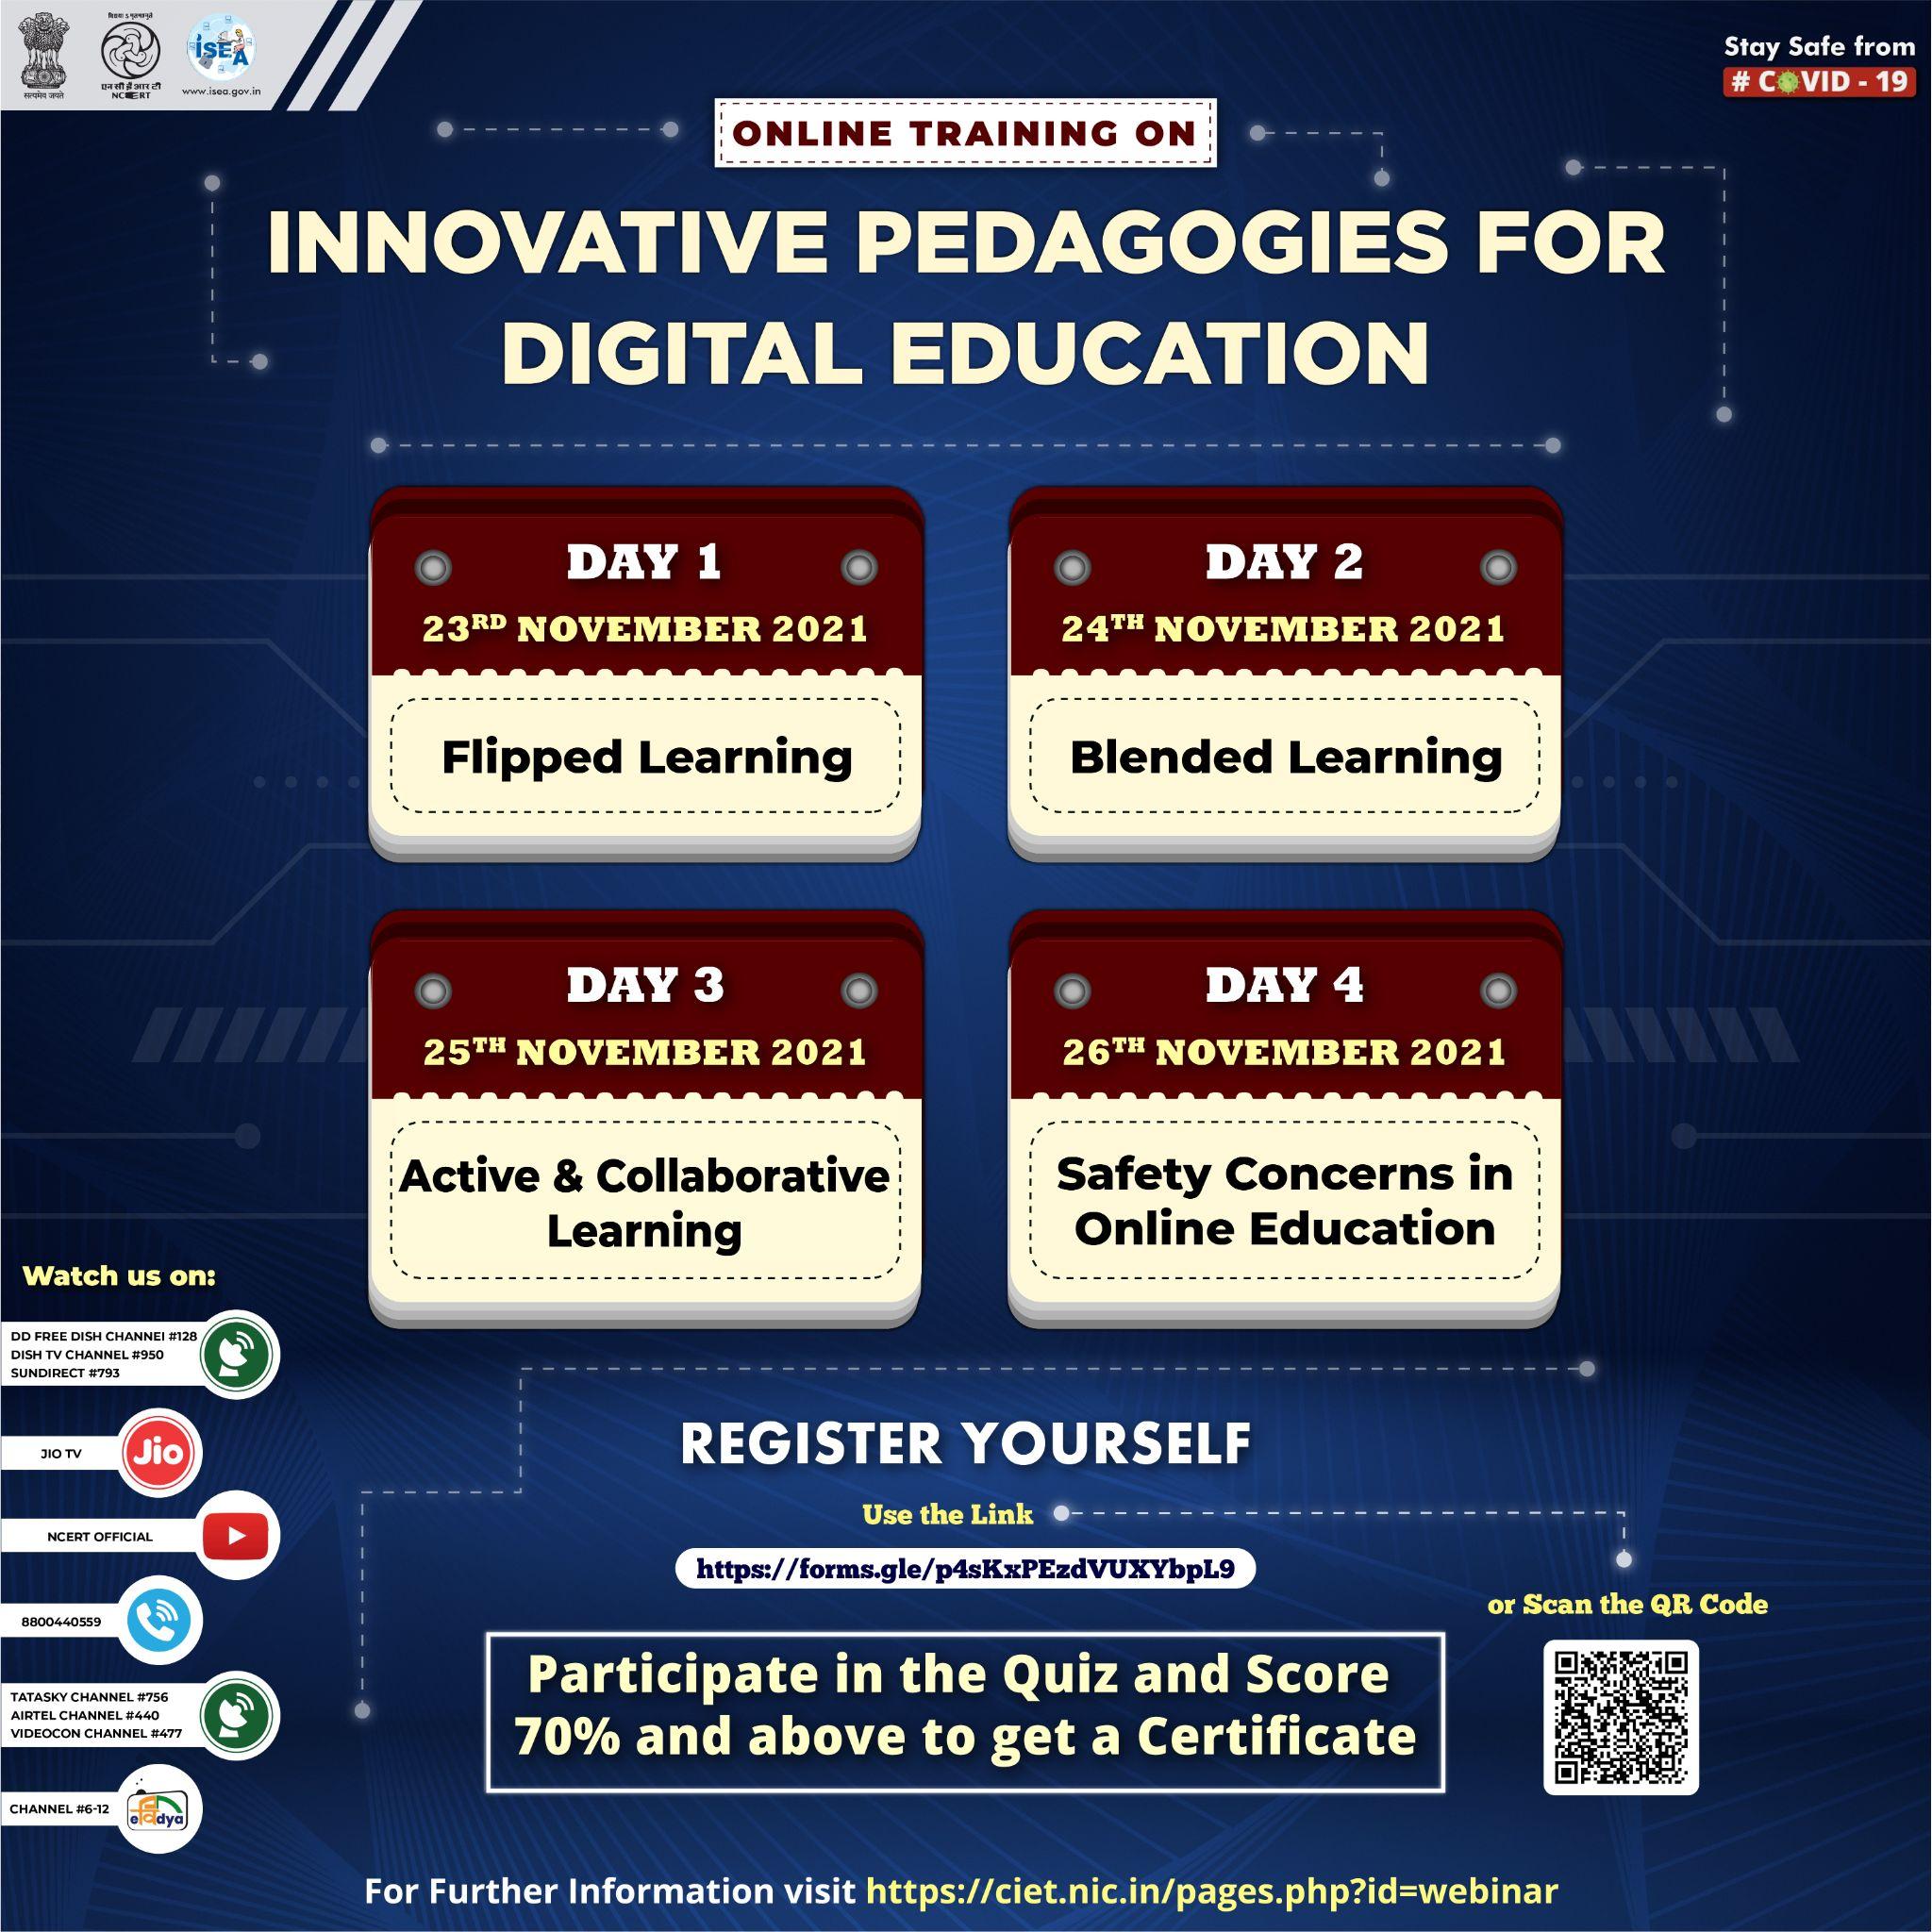 Online Training on “Innovative Pedagogies for Digital Education” Image